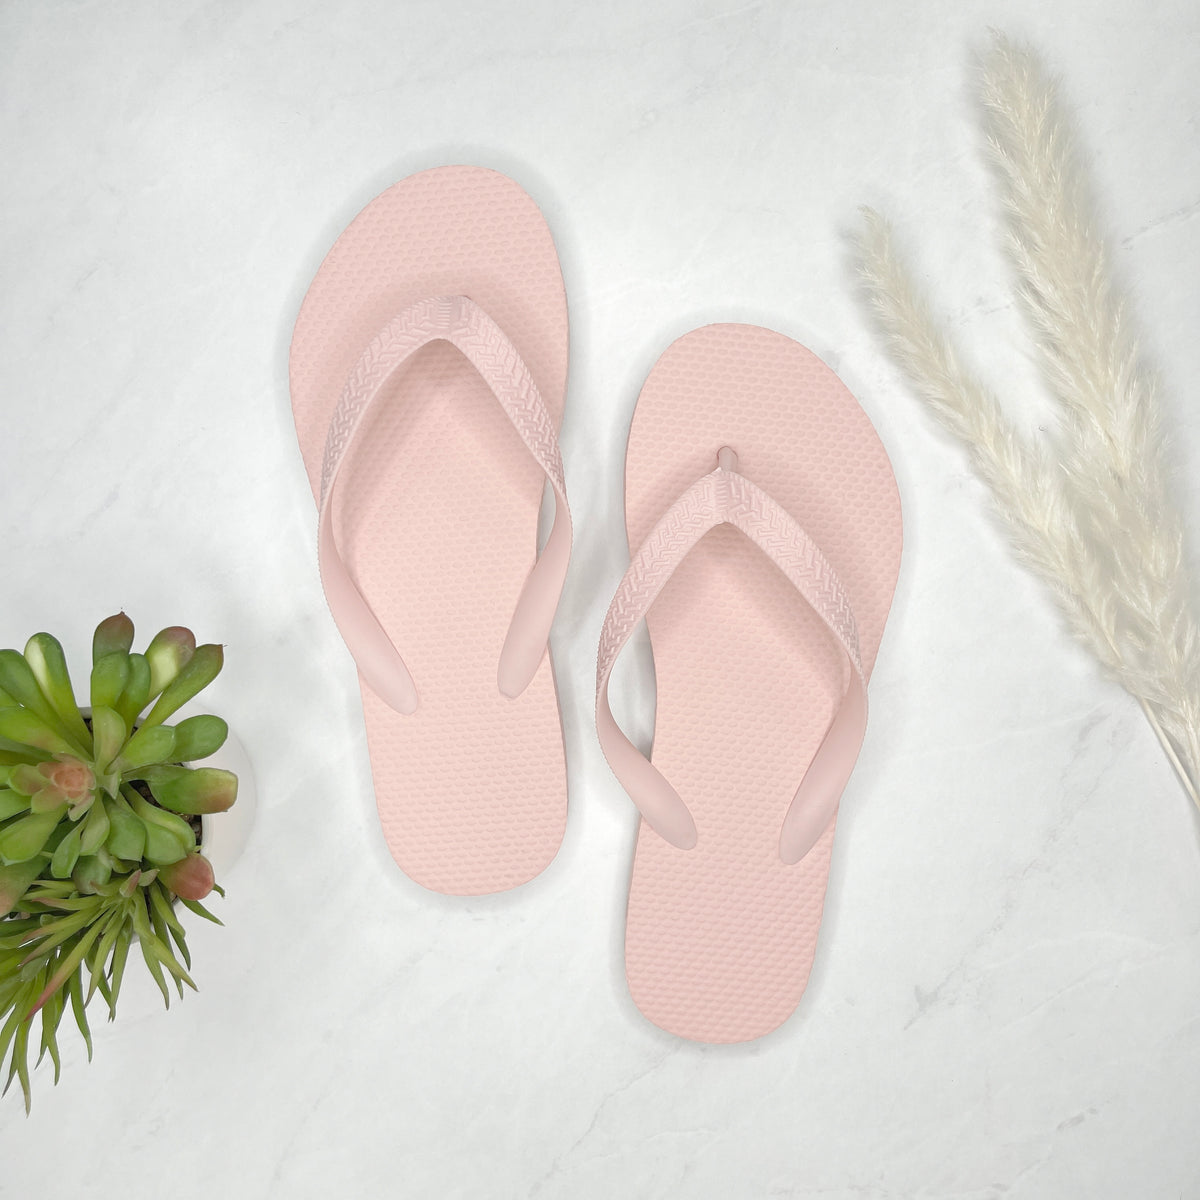 Buy Neon Flip Flops at seagullintl, 48 pairs per bulk case